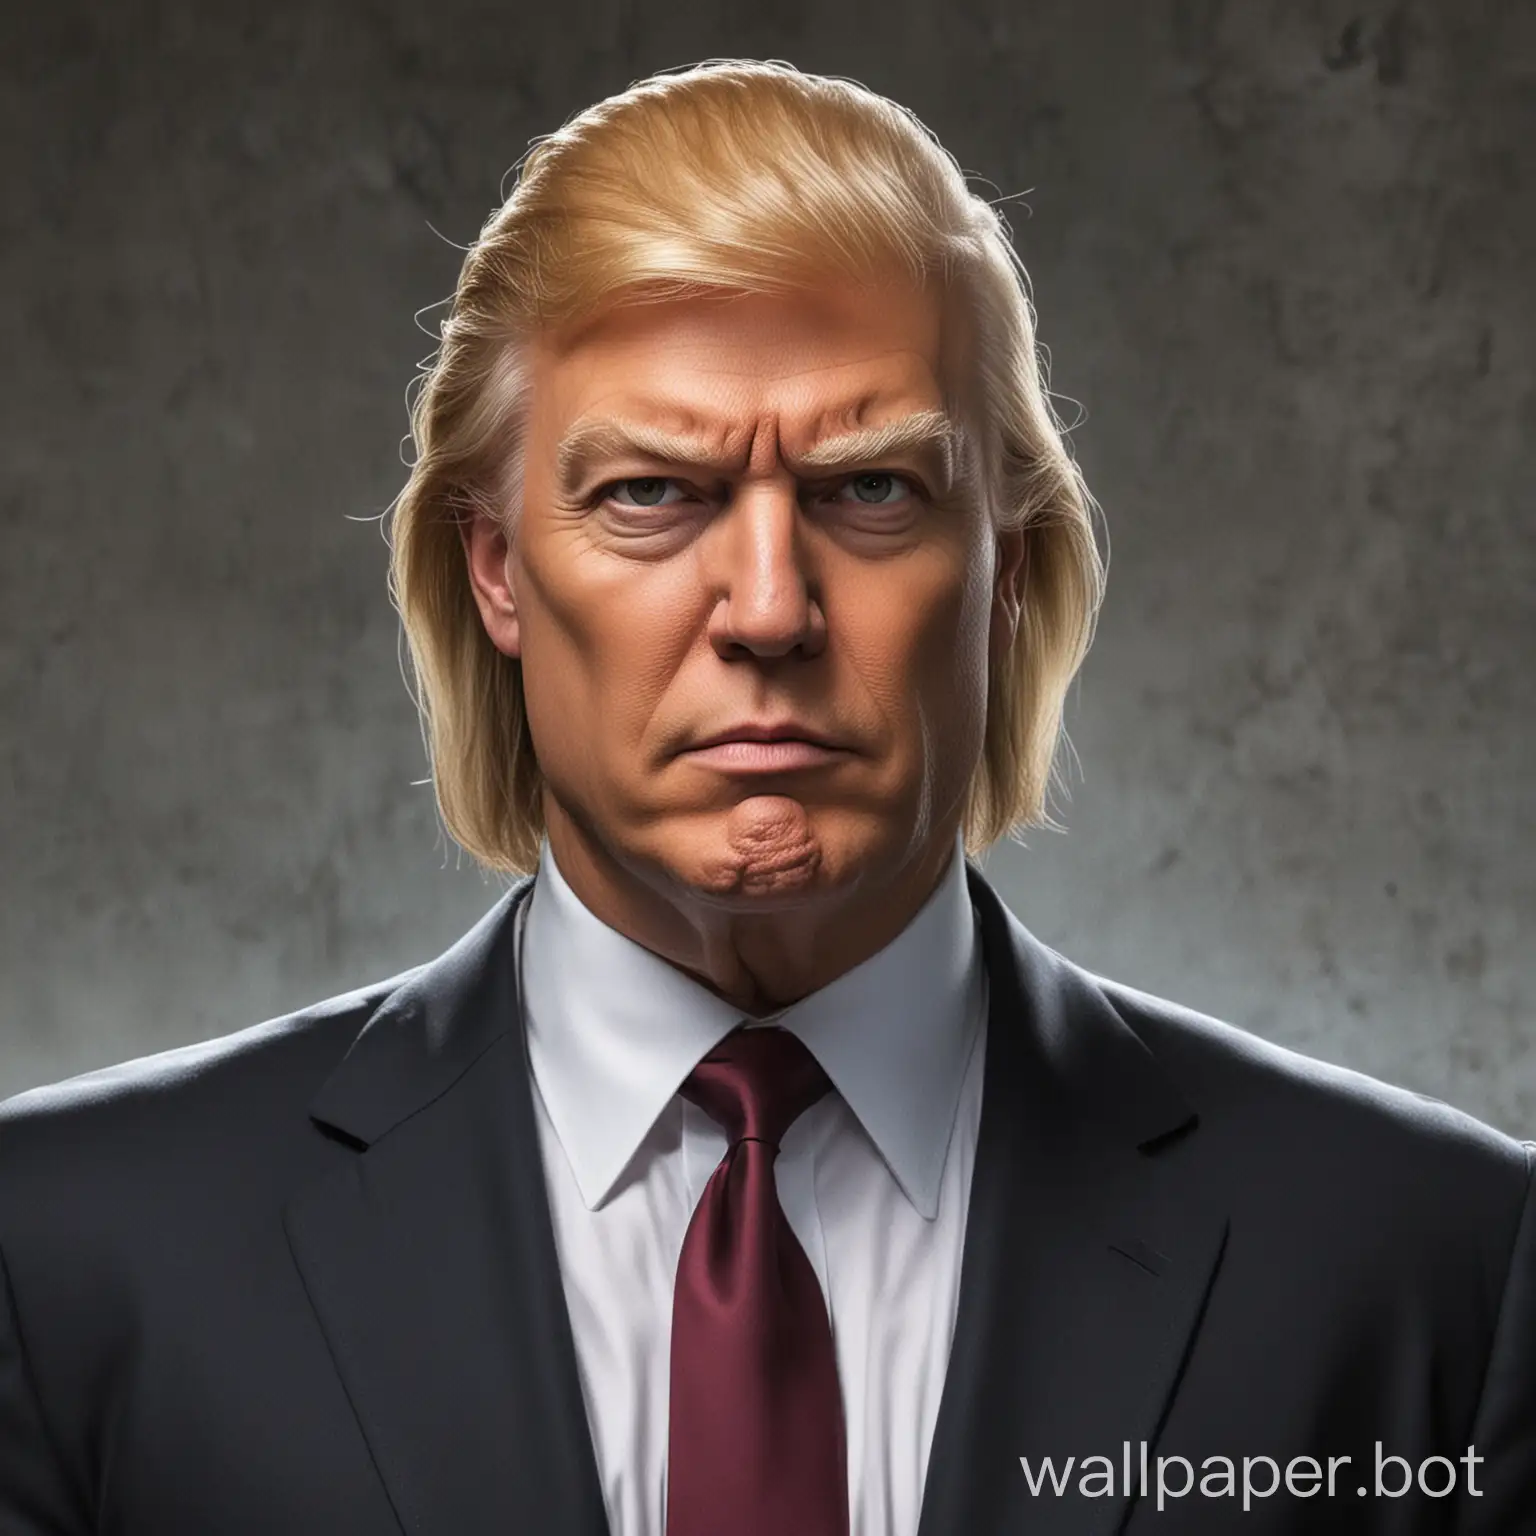 Trump-Portrayed-as-Lex-Luthor-Powerful-and-Villainous-Impression